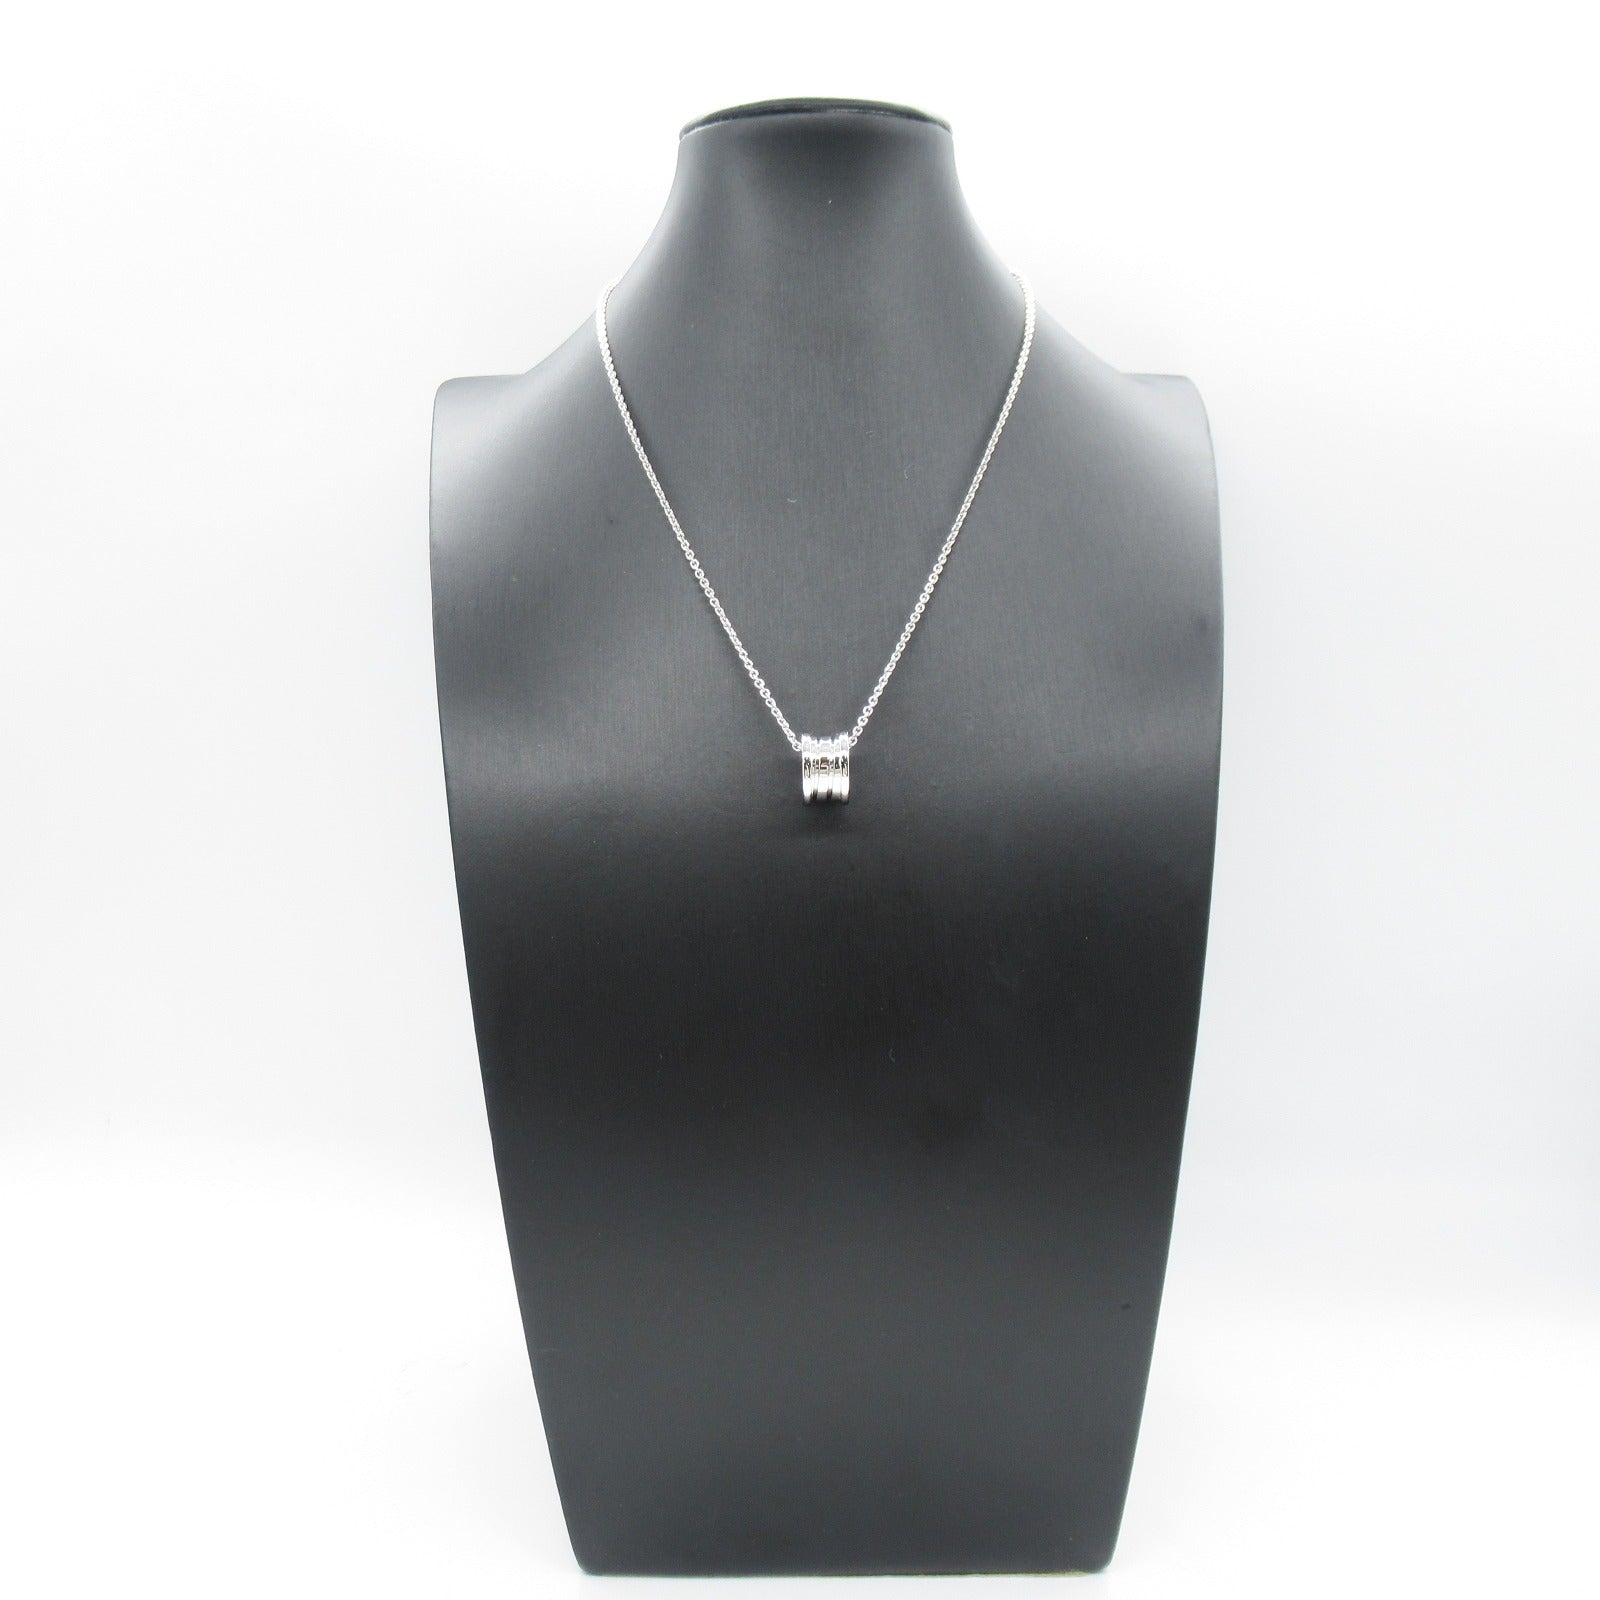 Bulgari BVLGARI B-zero1 Beezel one necklace necklace jewelry K18WG (White G)   Silver